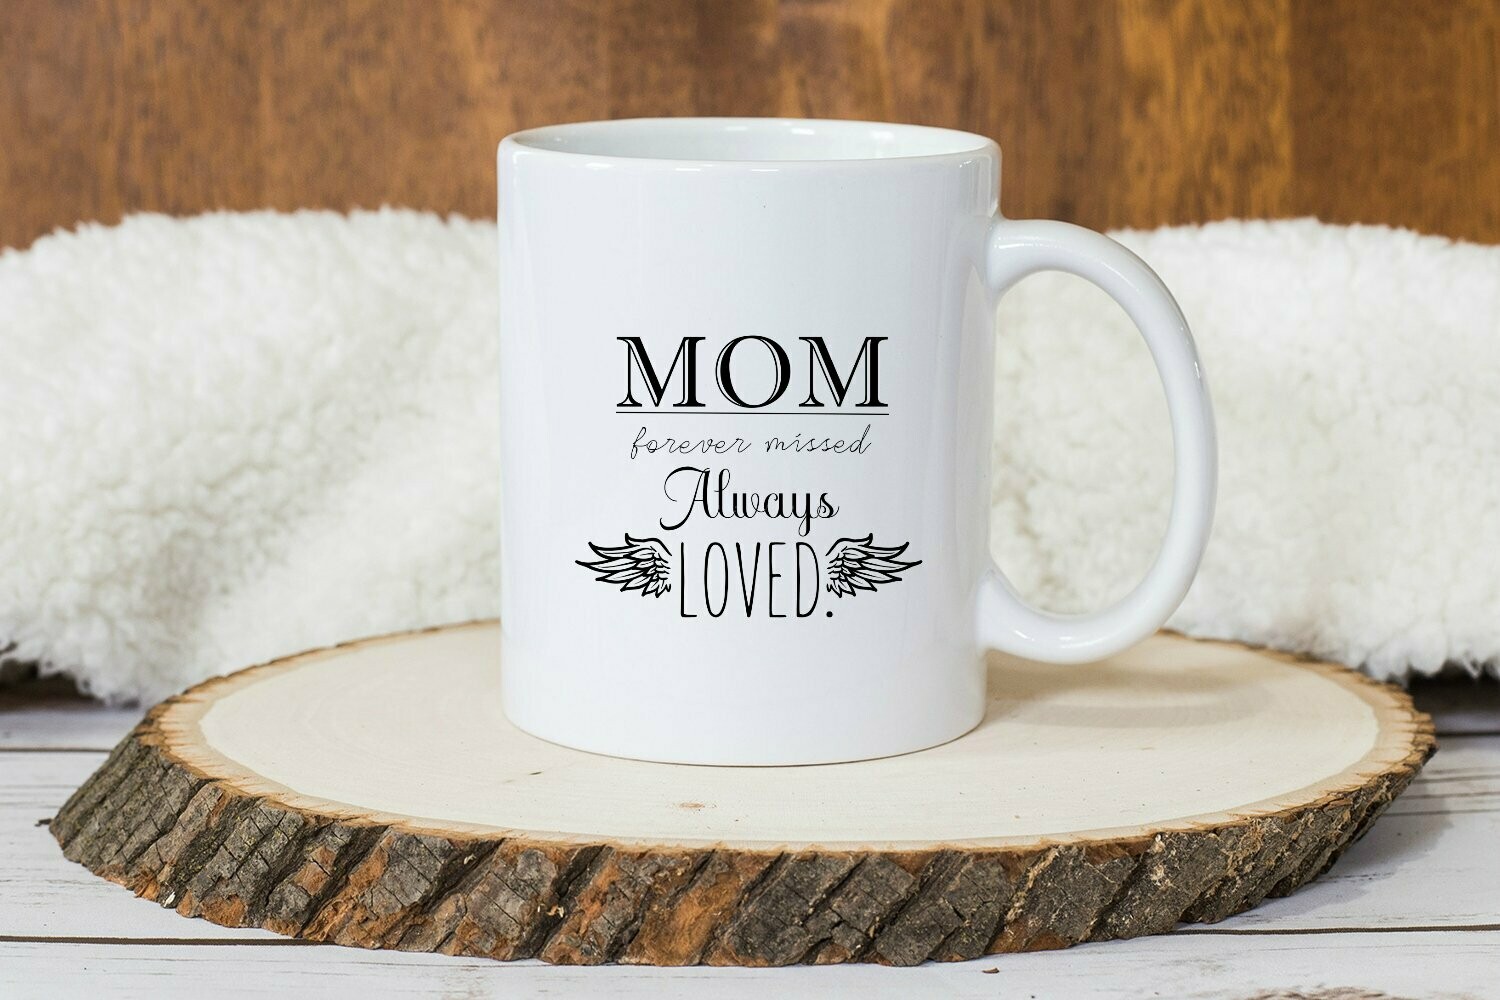 Mom Forever Missed, Always Loved Mug